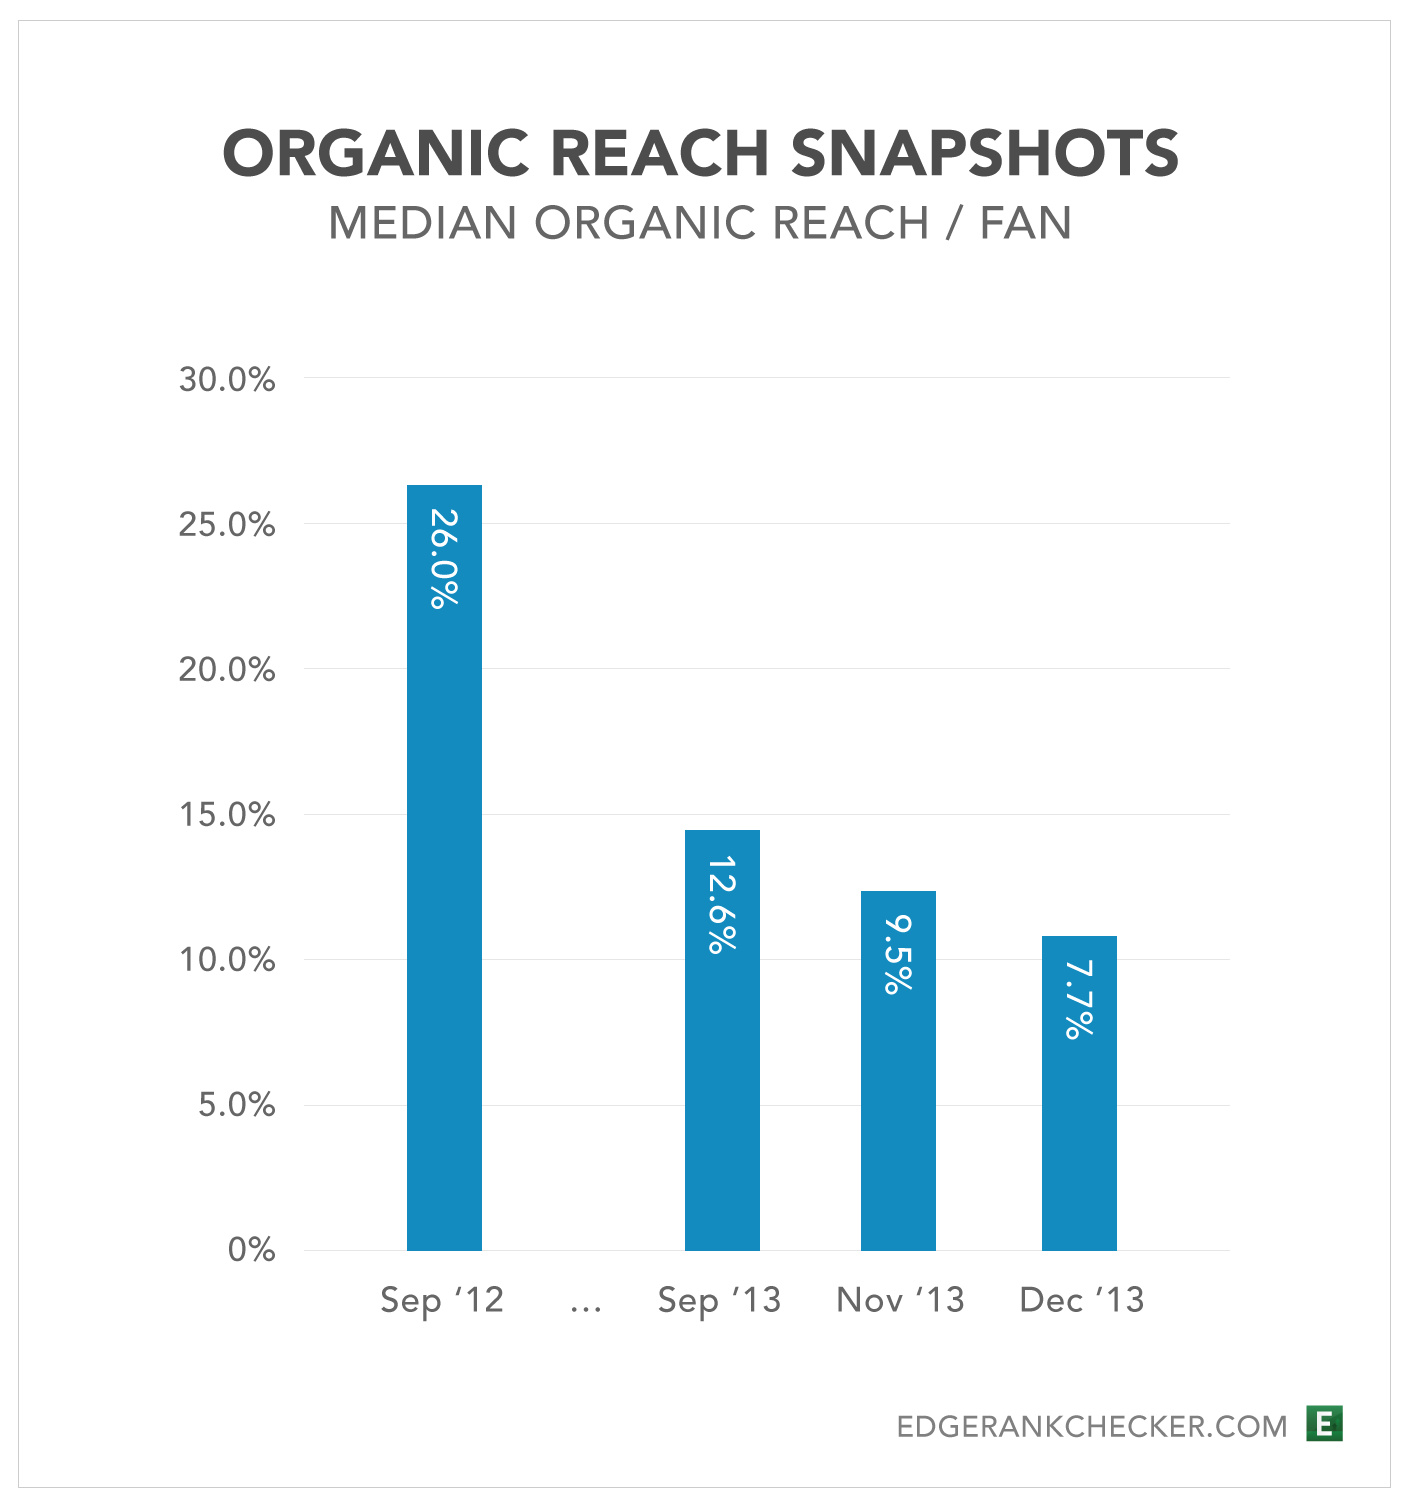 Organic reach snapshots